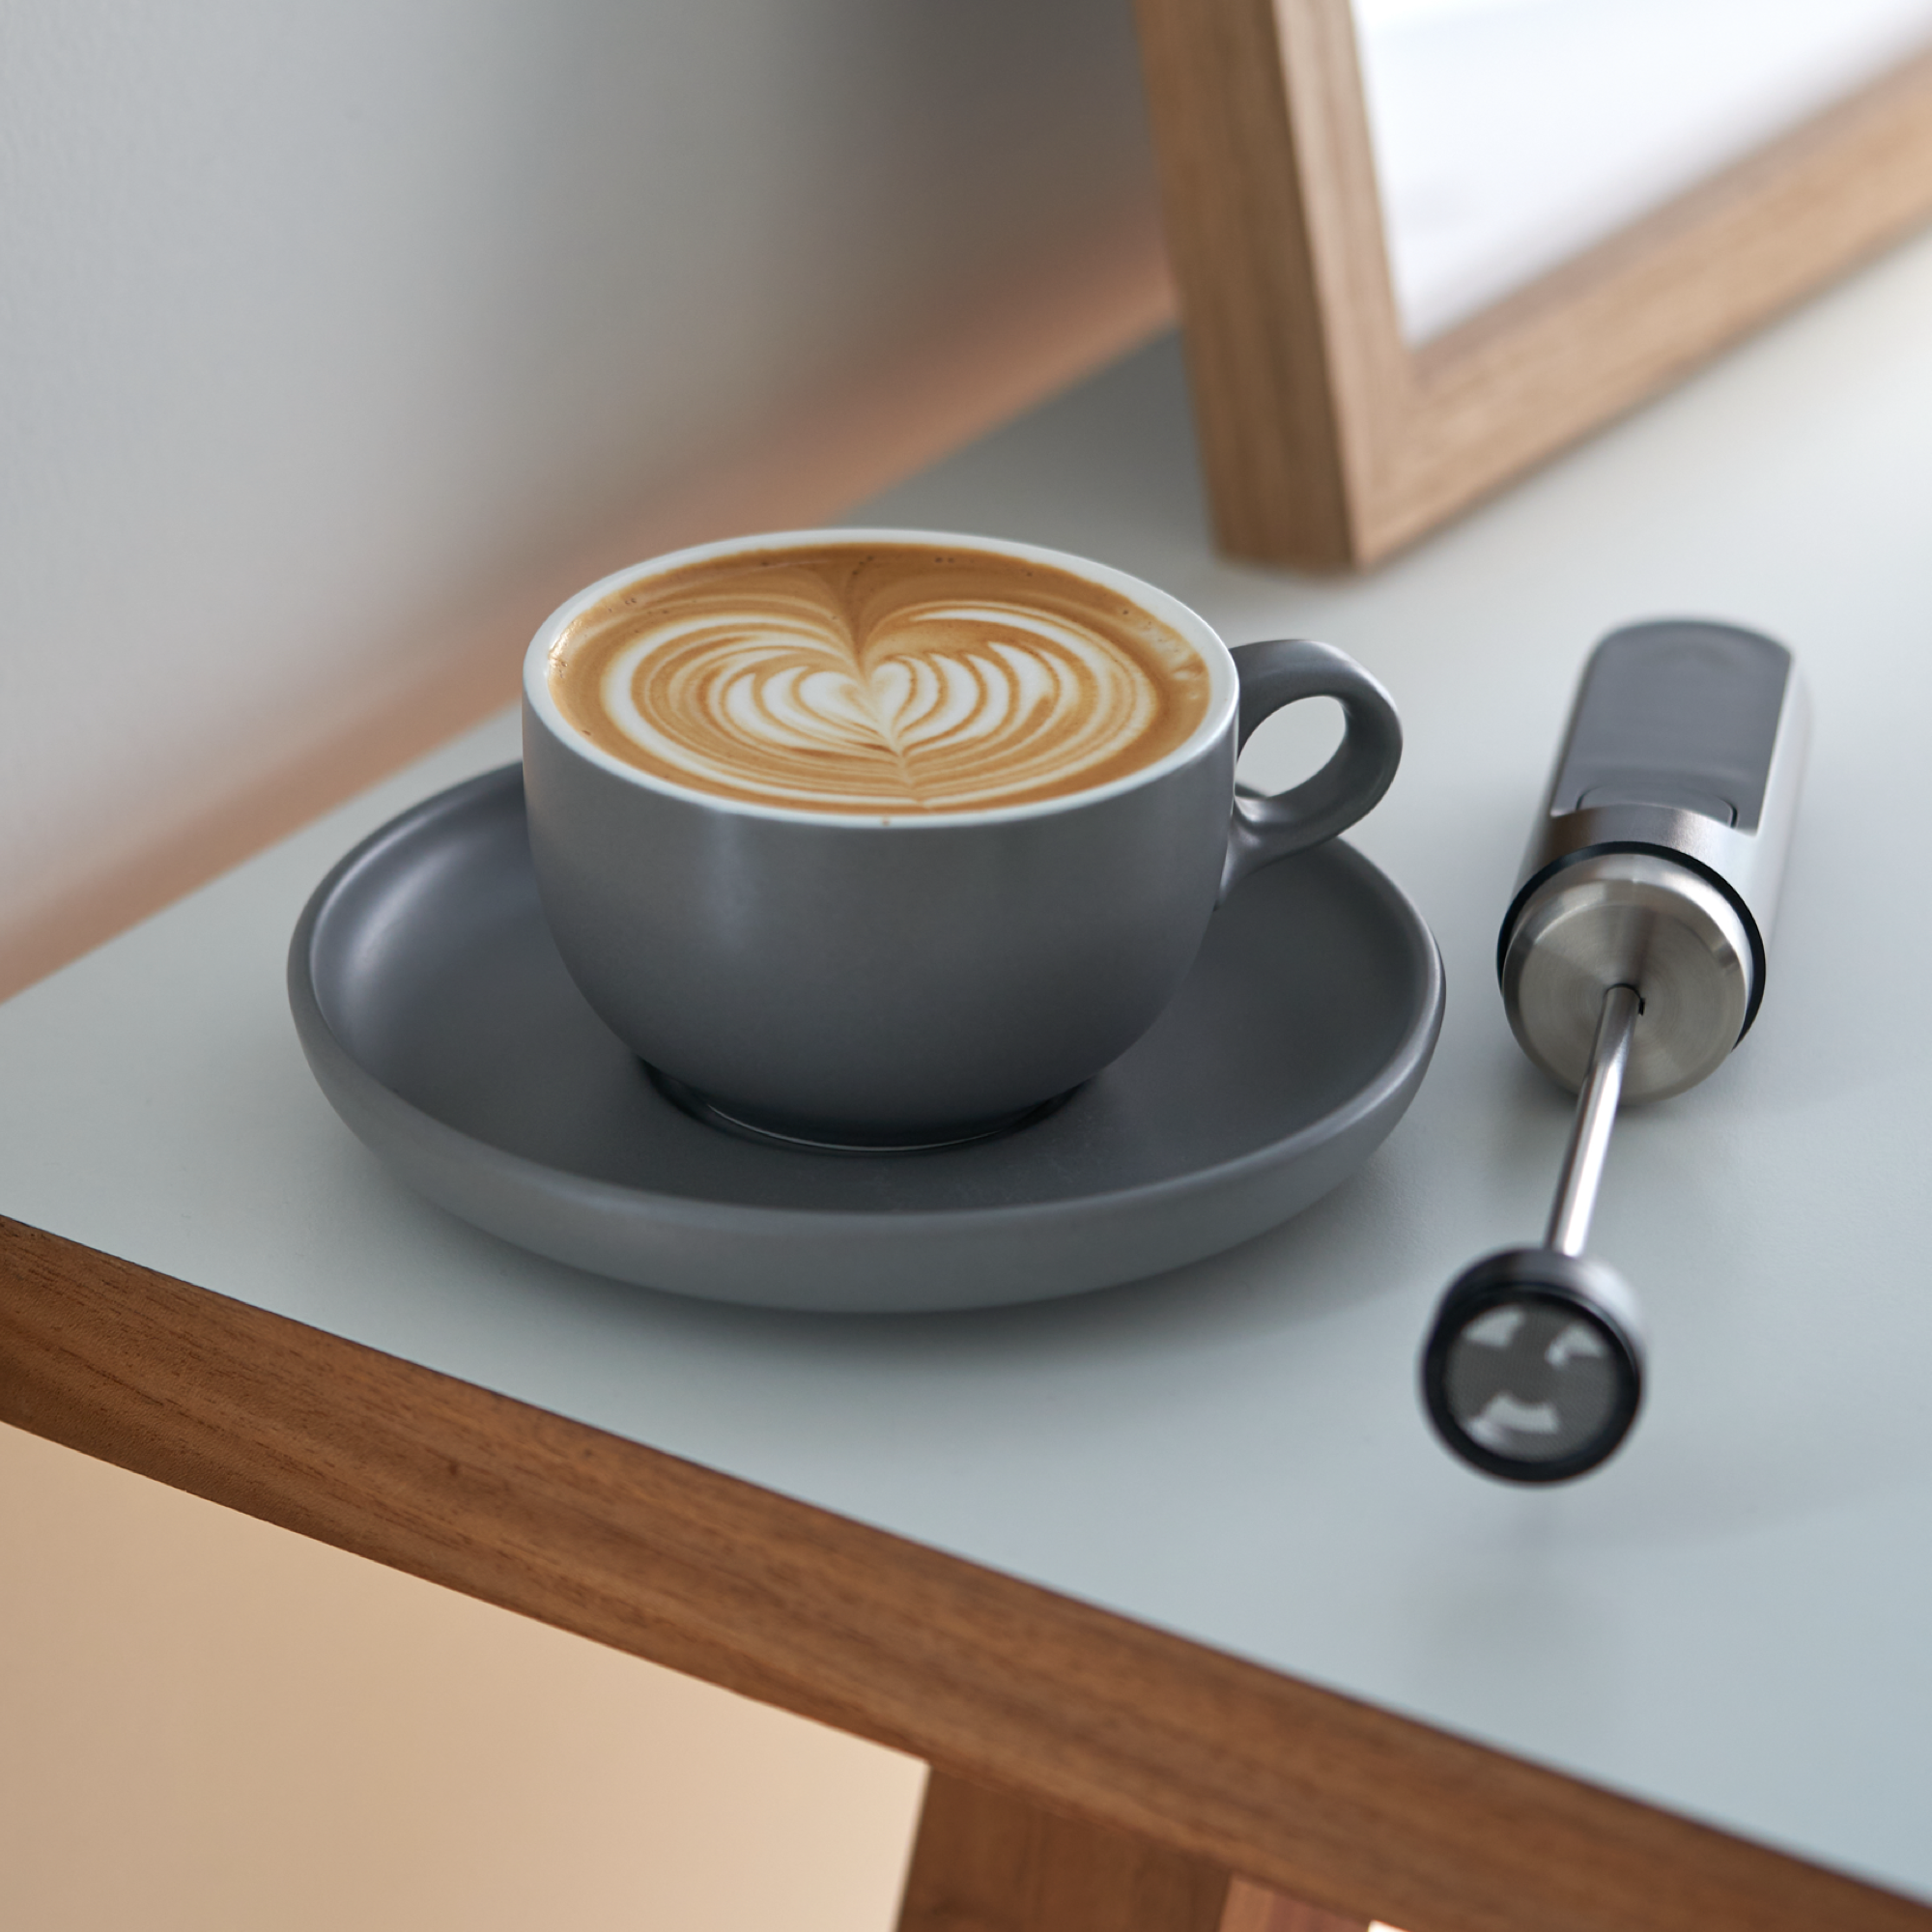 This handheld milk frother creates café-quality microfoam milk for latte art